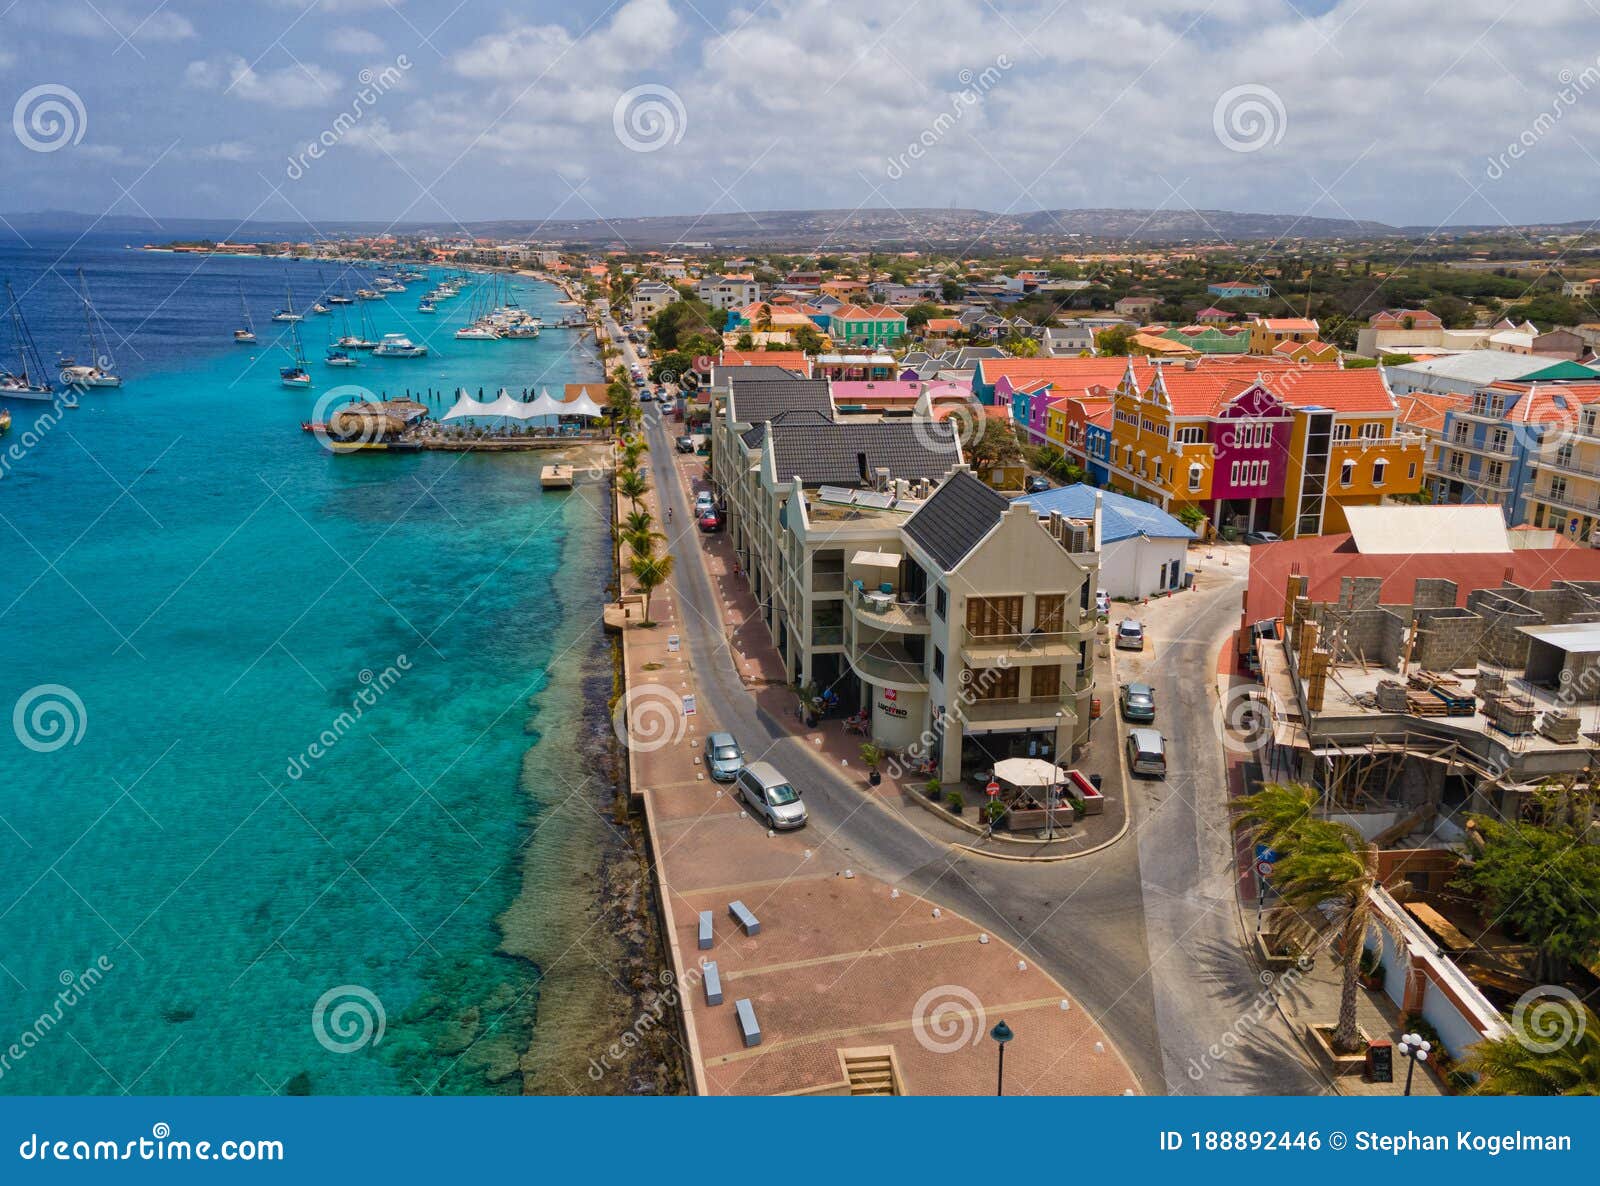 Centre Of Kralendijk On Bonaire Island Editorial Photo Image Of Destinations Coast 188892446